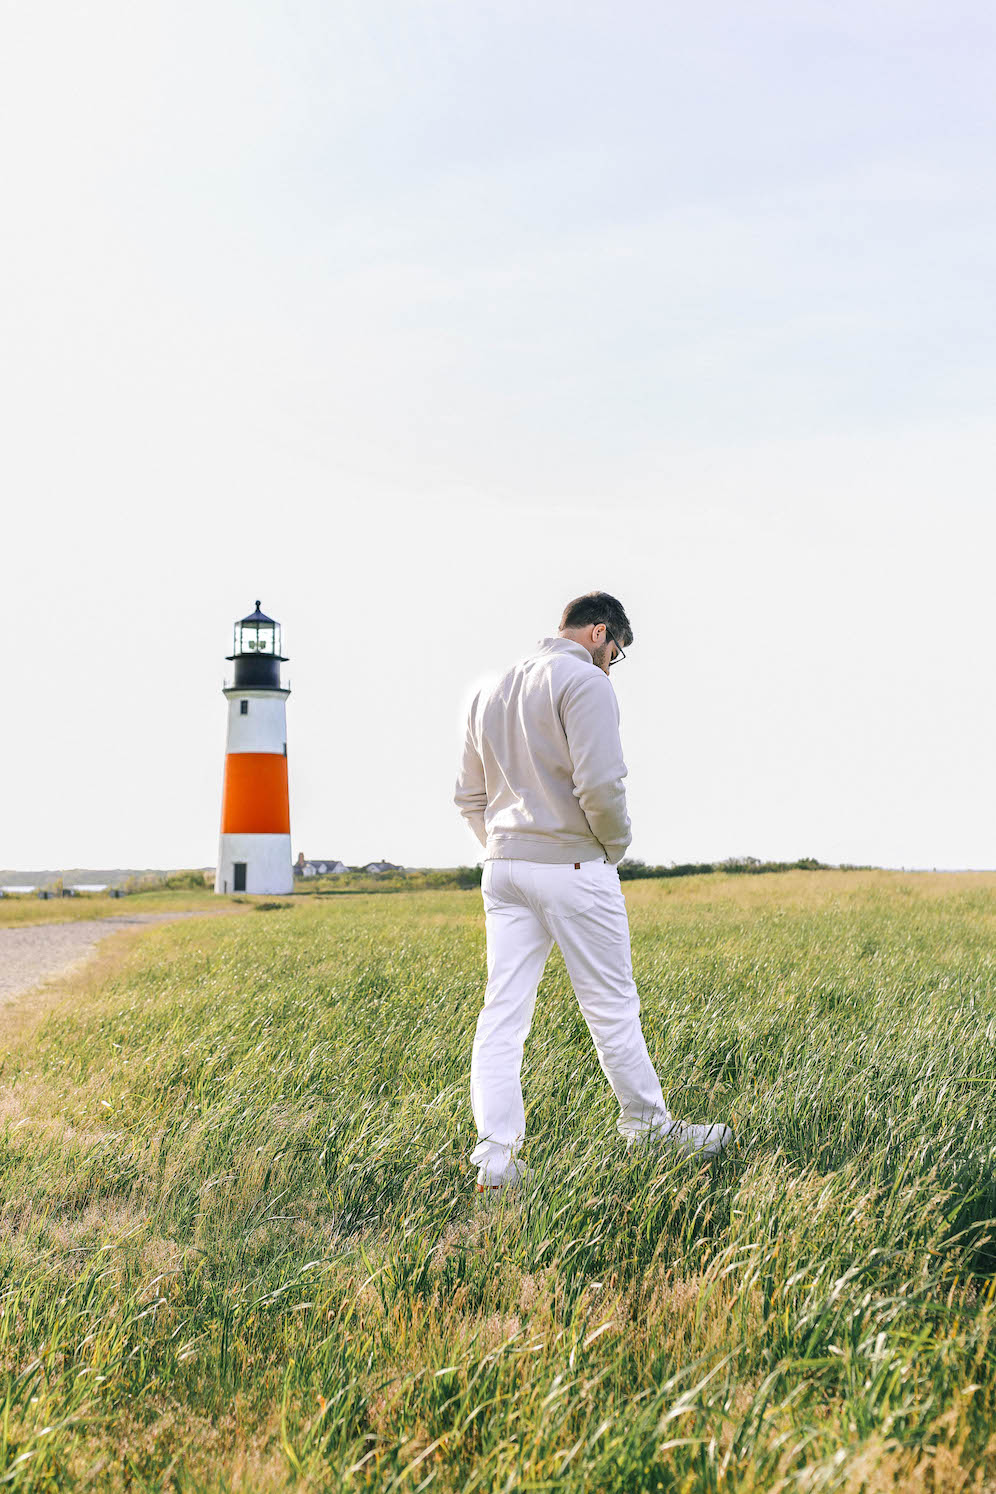 Sankaty Head Lighthouse Nantucket The Coastal Confidence by Aubrey Yandow